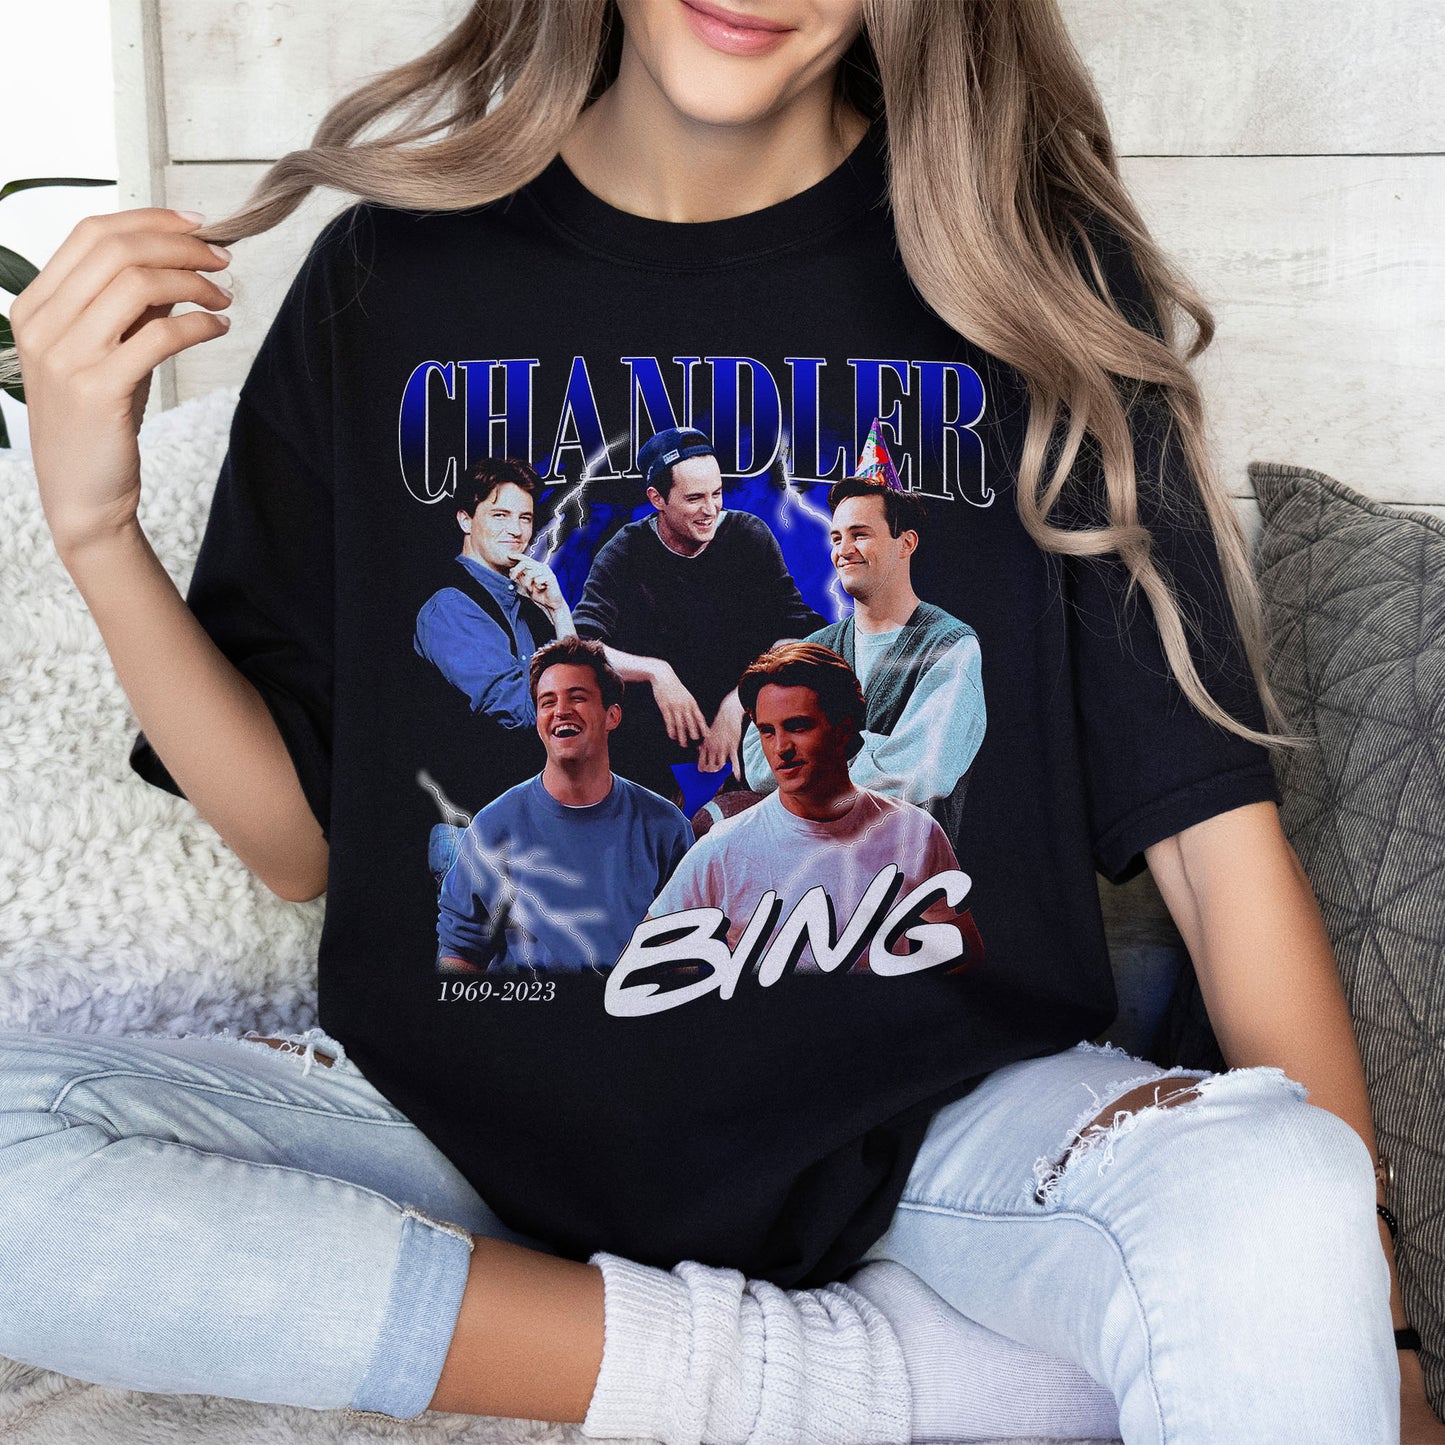 Chandler Bing Bootleg Shirt